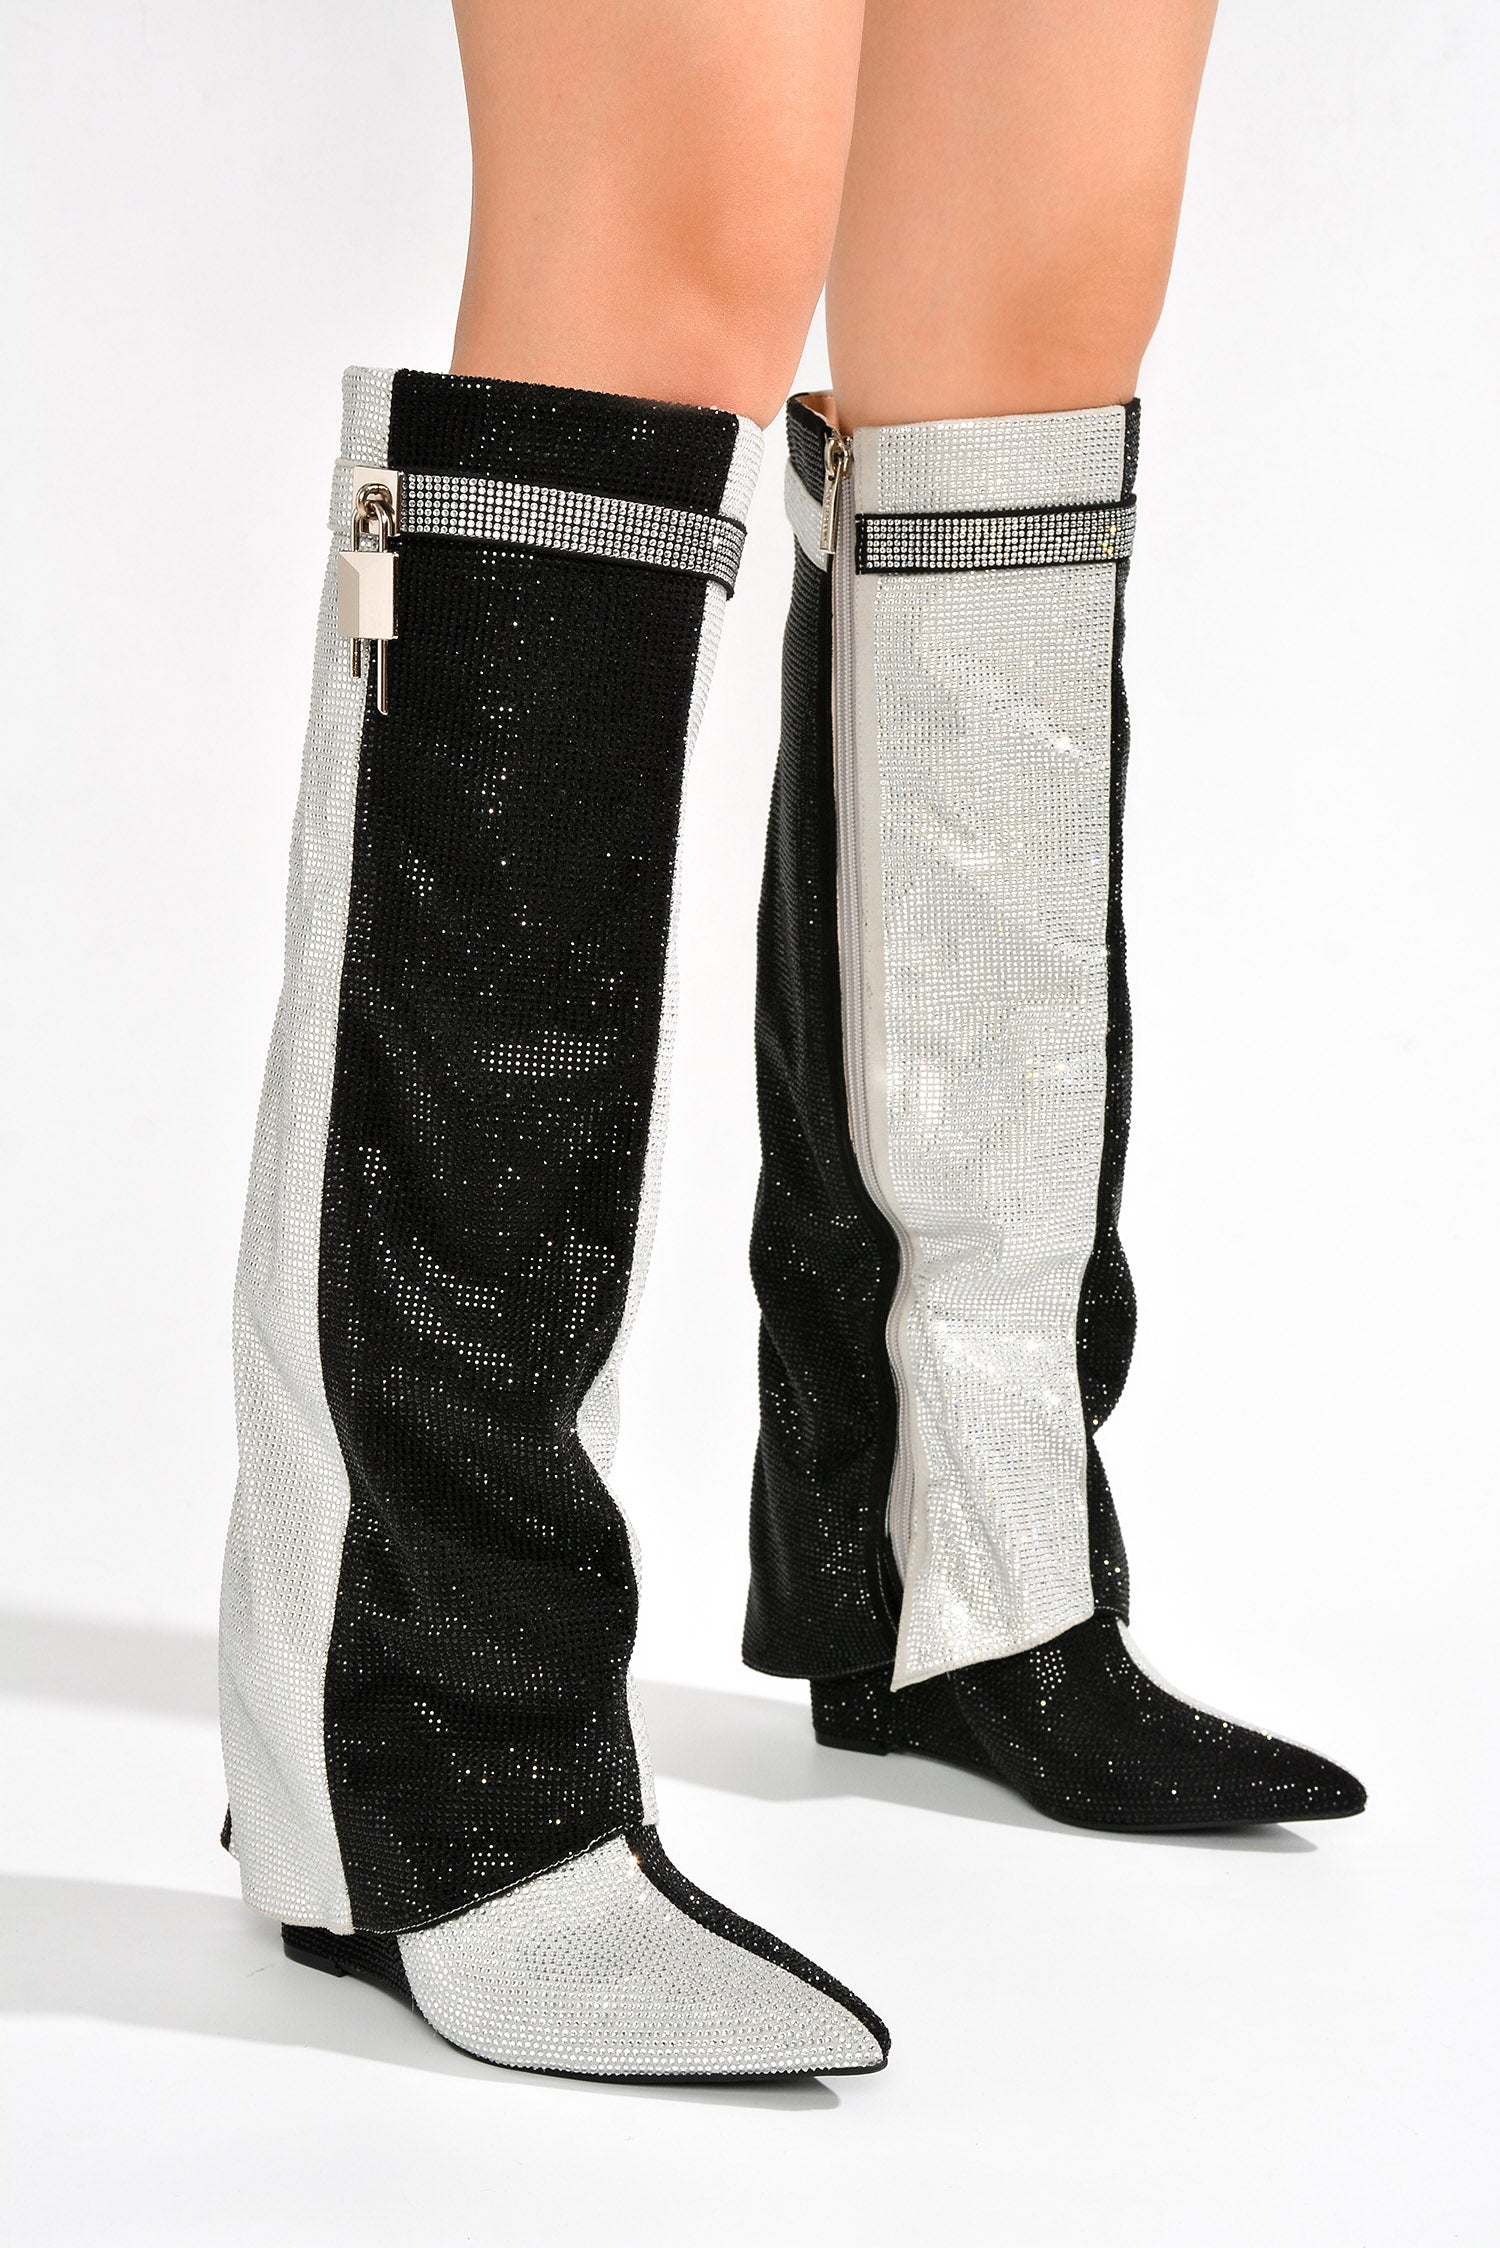 UrbanOG - Anitta Rhinestone Fold Over Wedge Boots - BOOTS